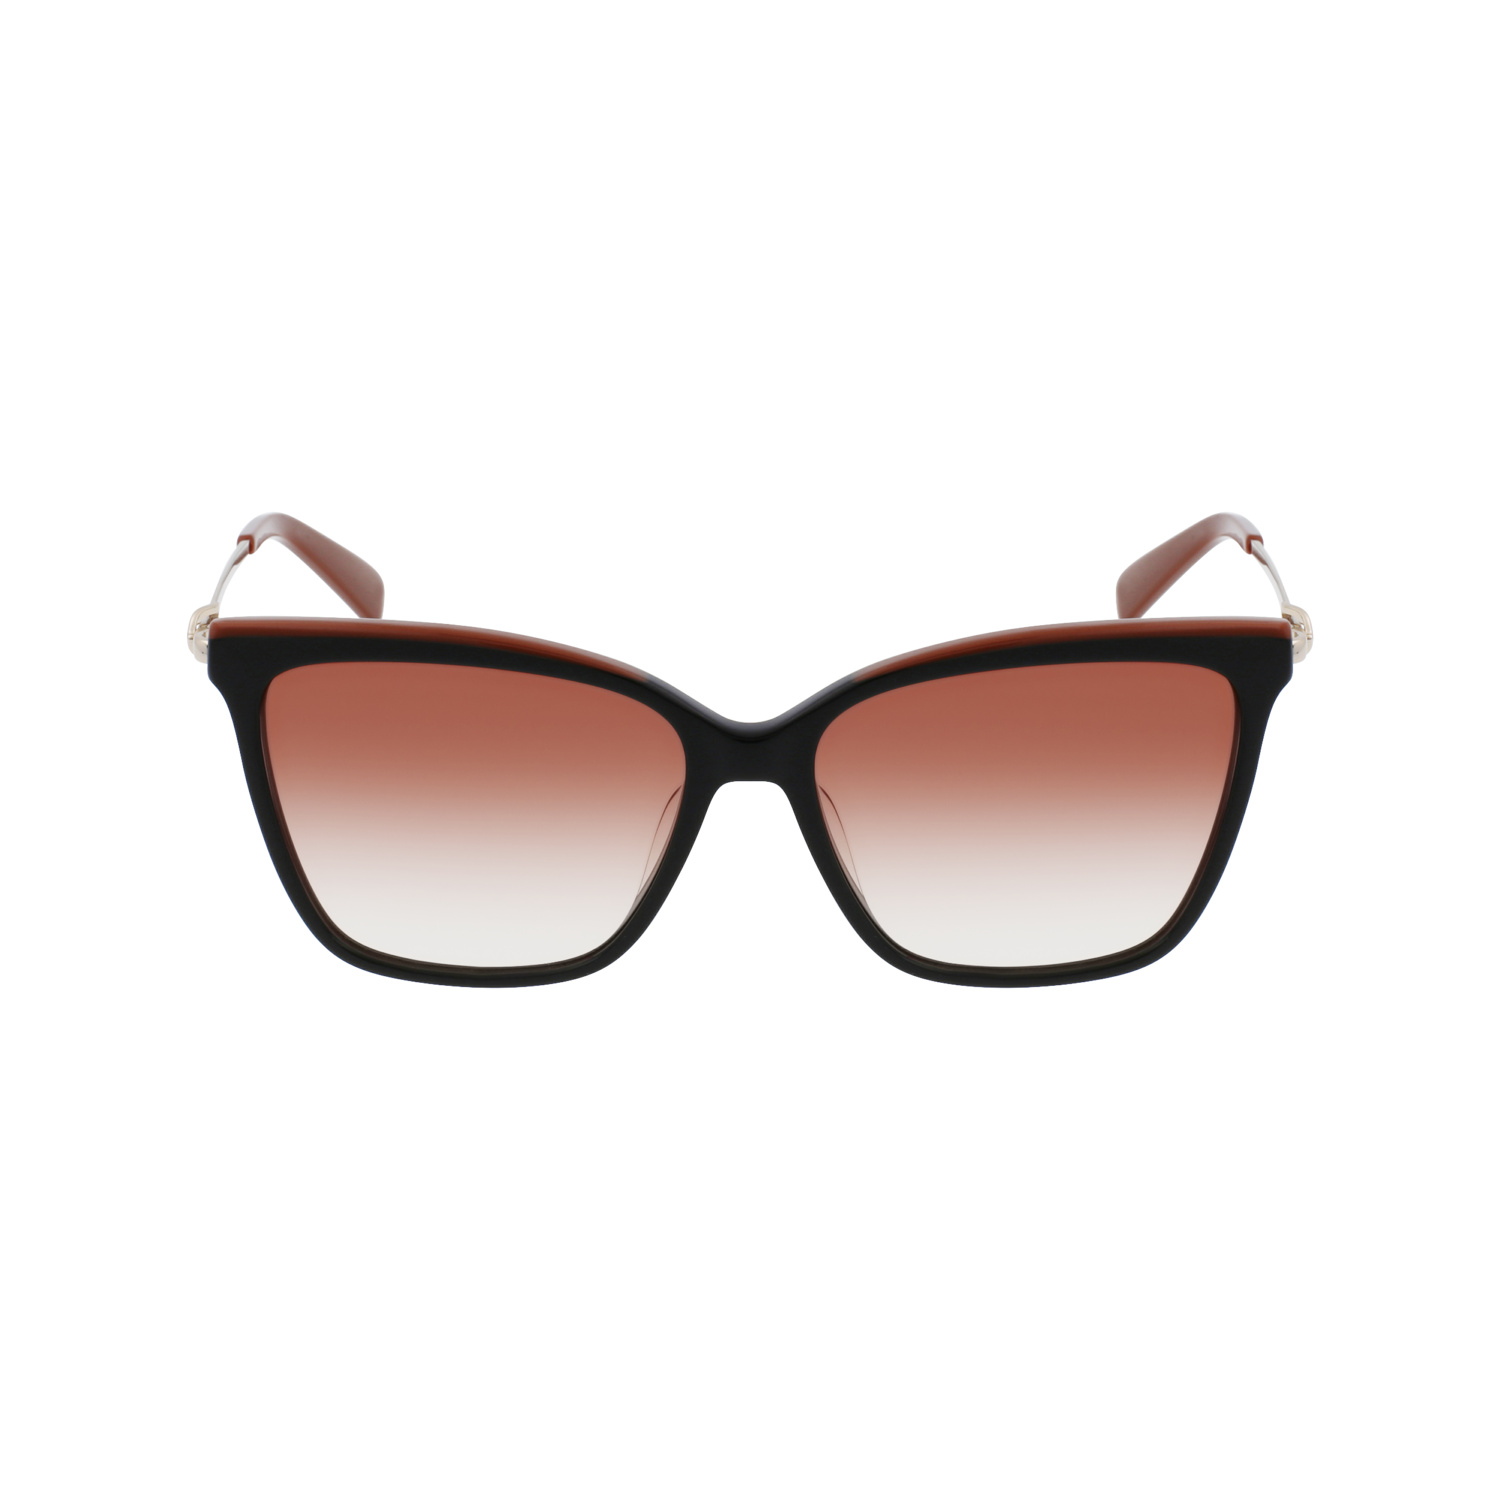 LONGCHAMP Sunglasses | ModeSens